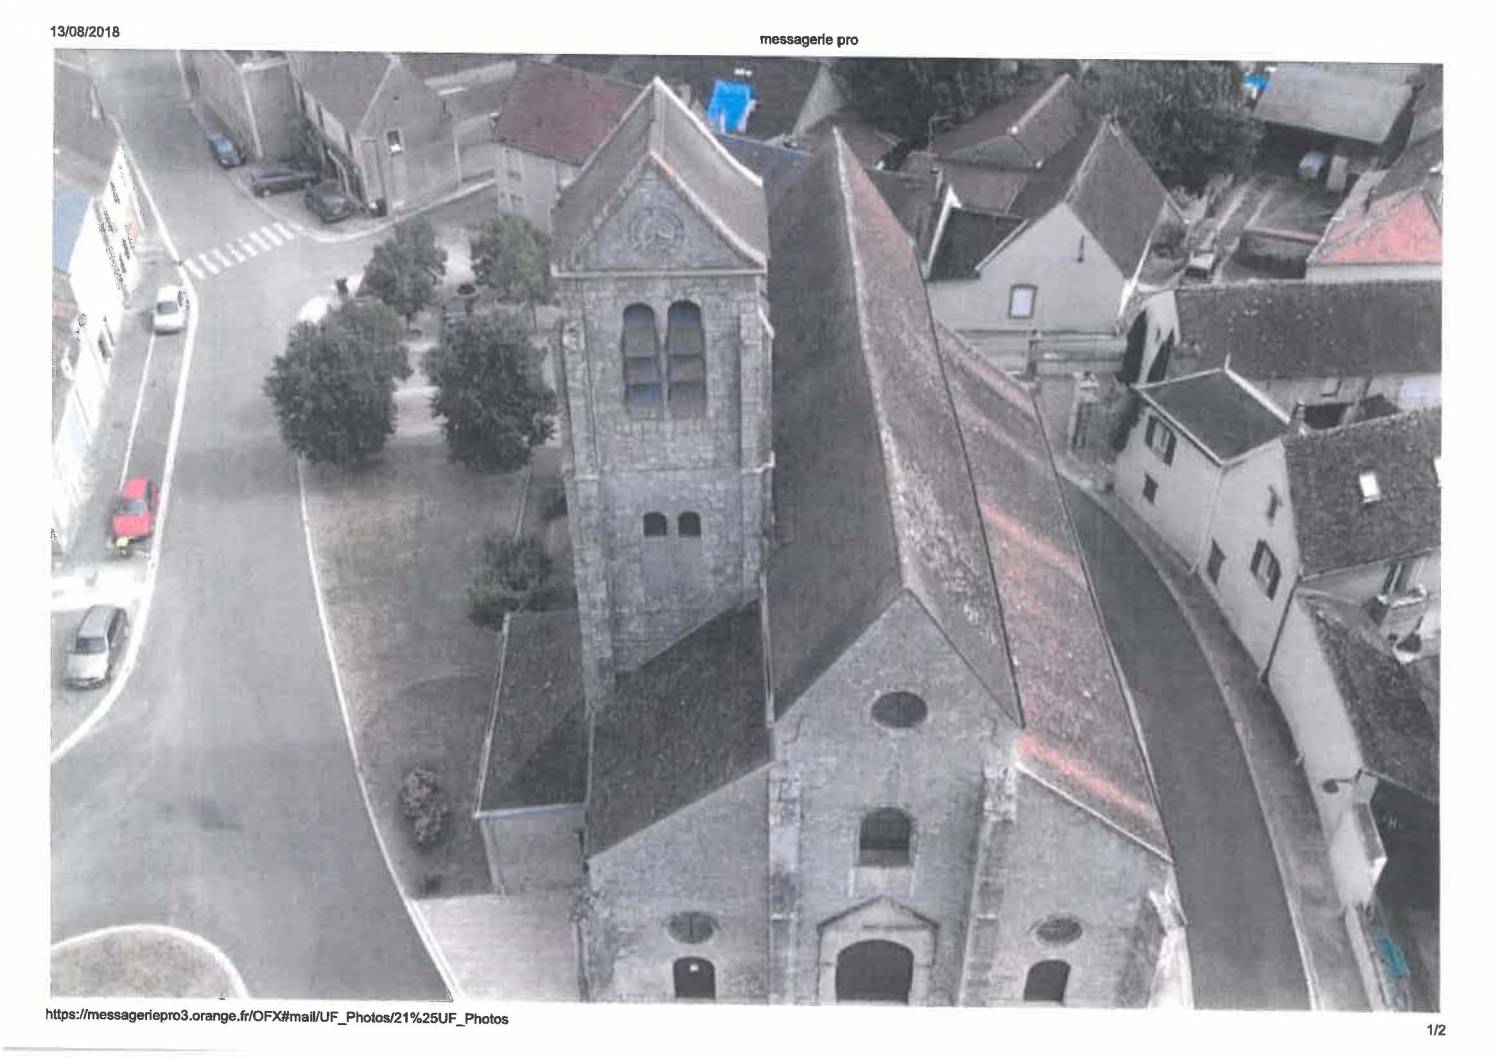 Auxy (45) - église Saint-Martin